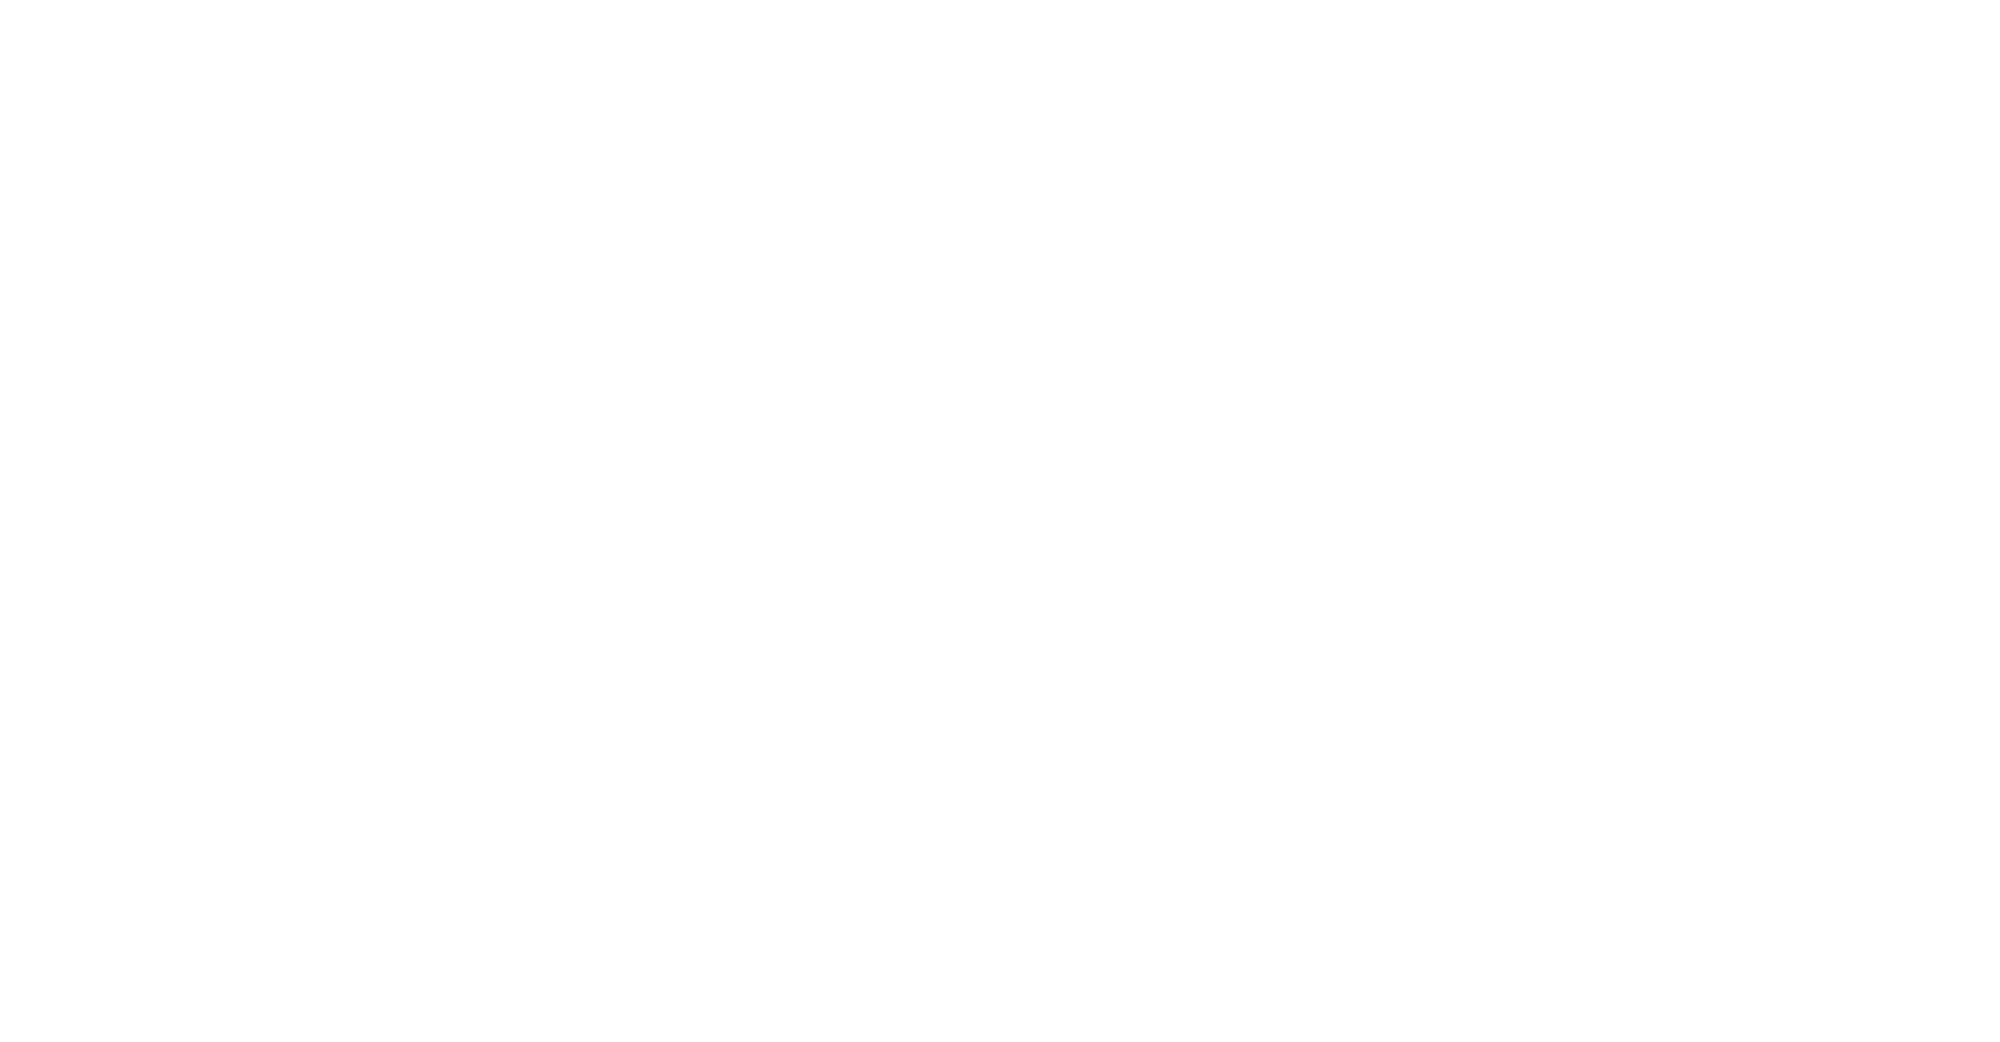 Santa Monica Service Rolls Royce & Bentley